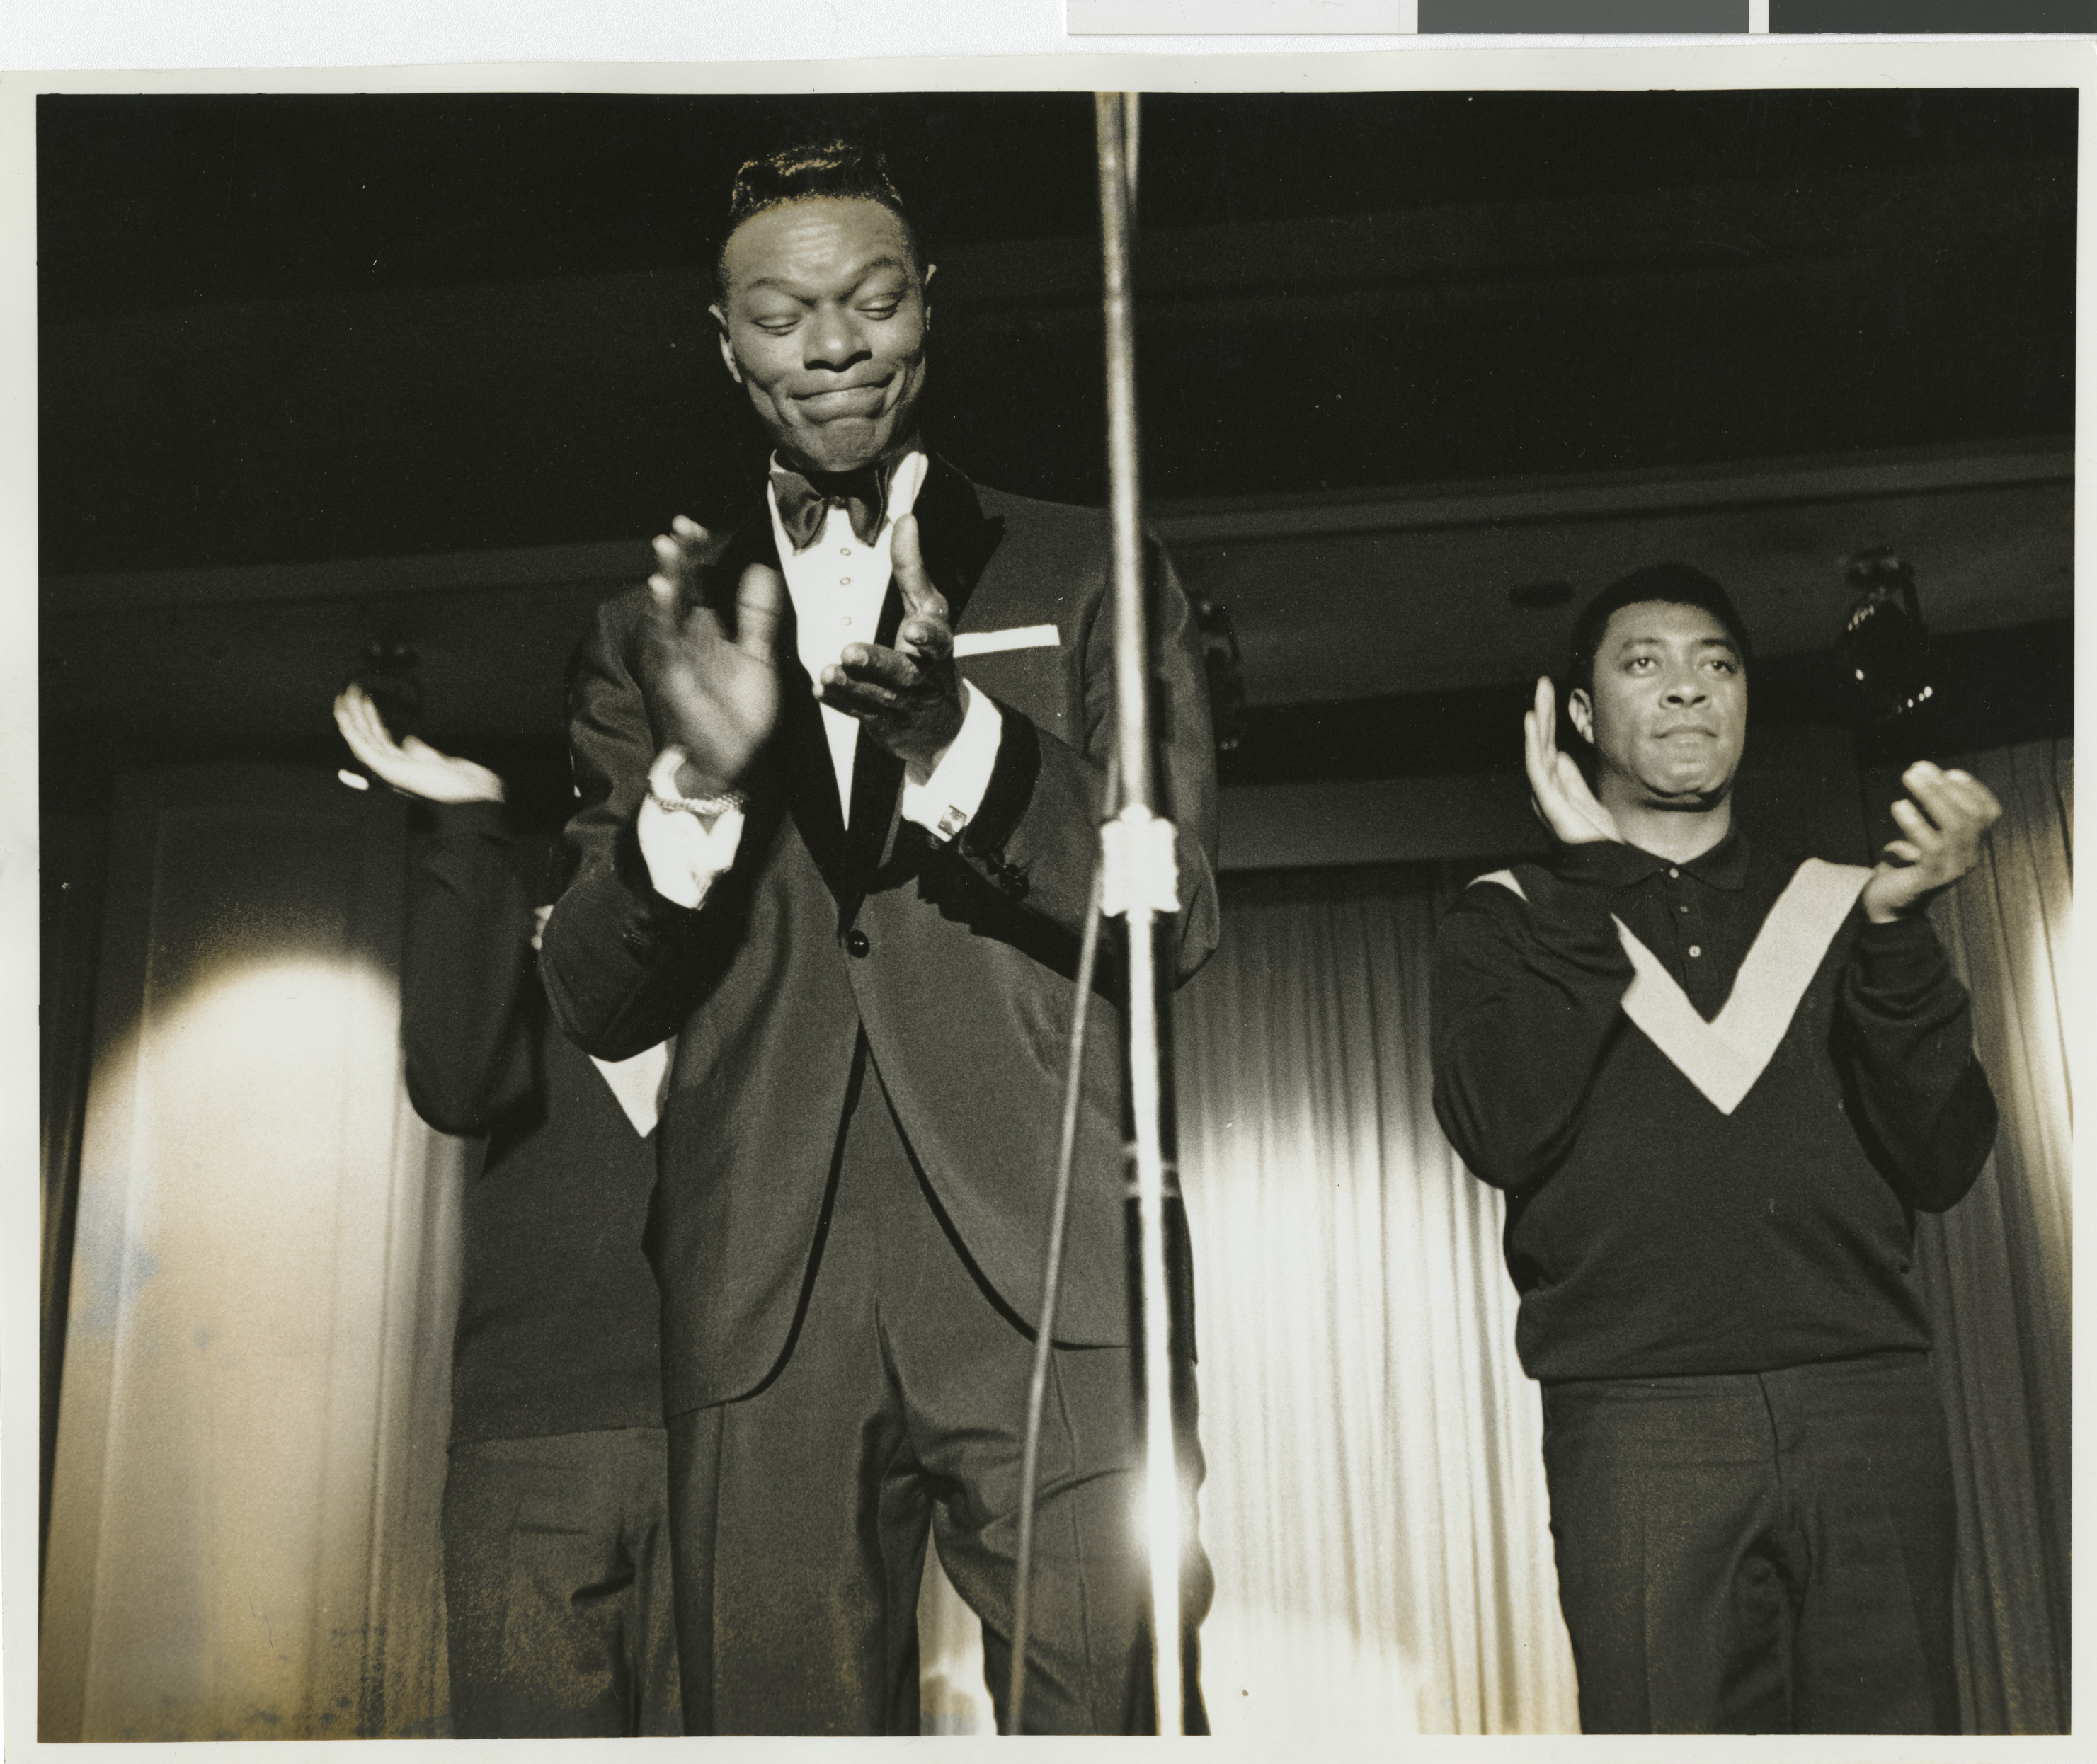 Nat King Cole on stage, Image 02